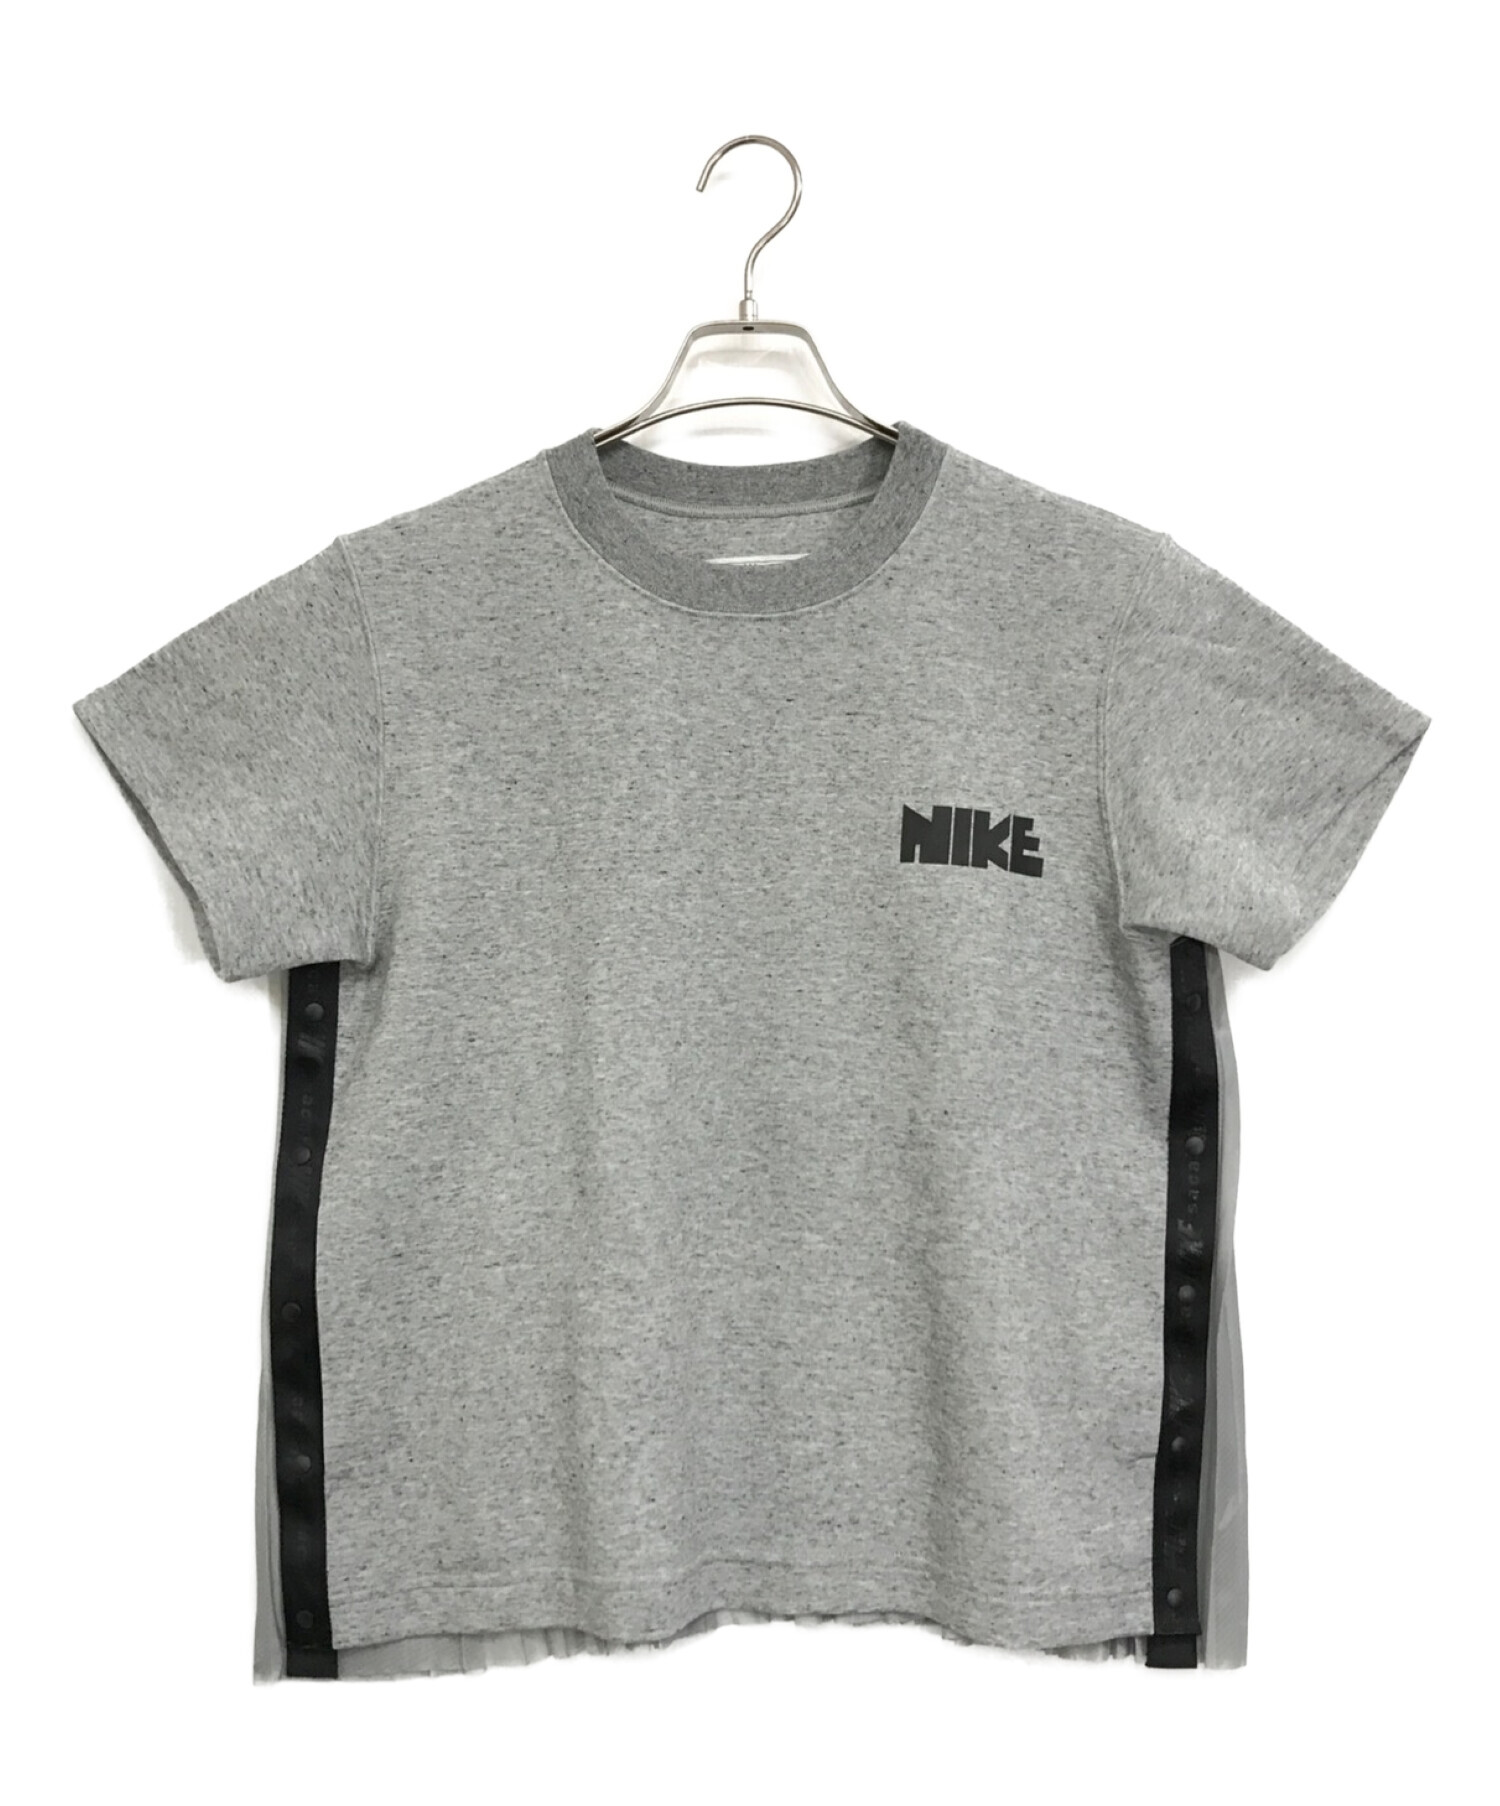 NIKE (ナイキ) sacai (サカイ) バックプリーツTシャツ グレー サイズ:L